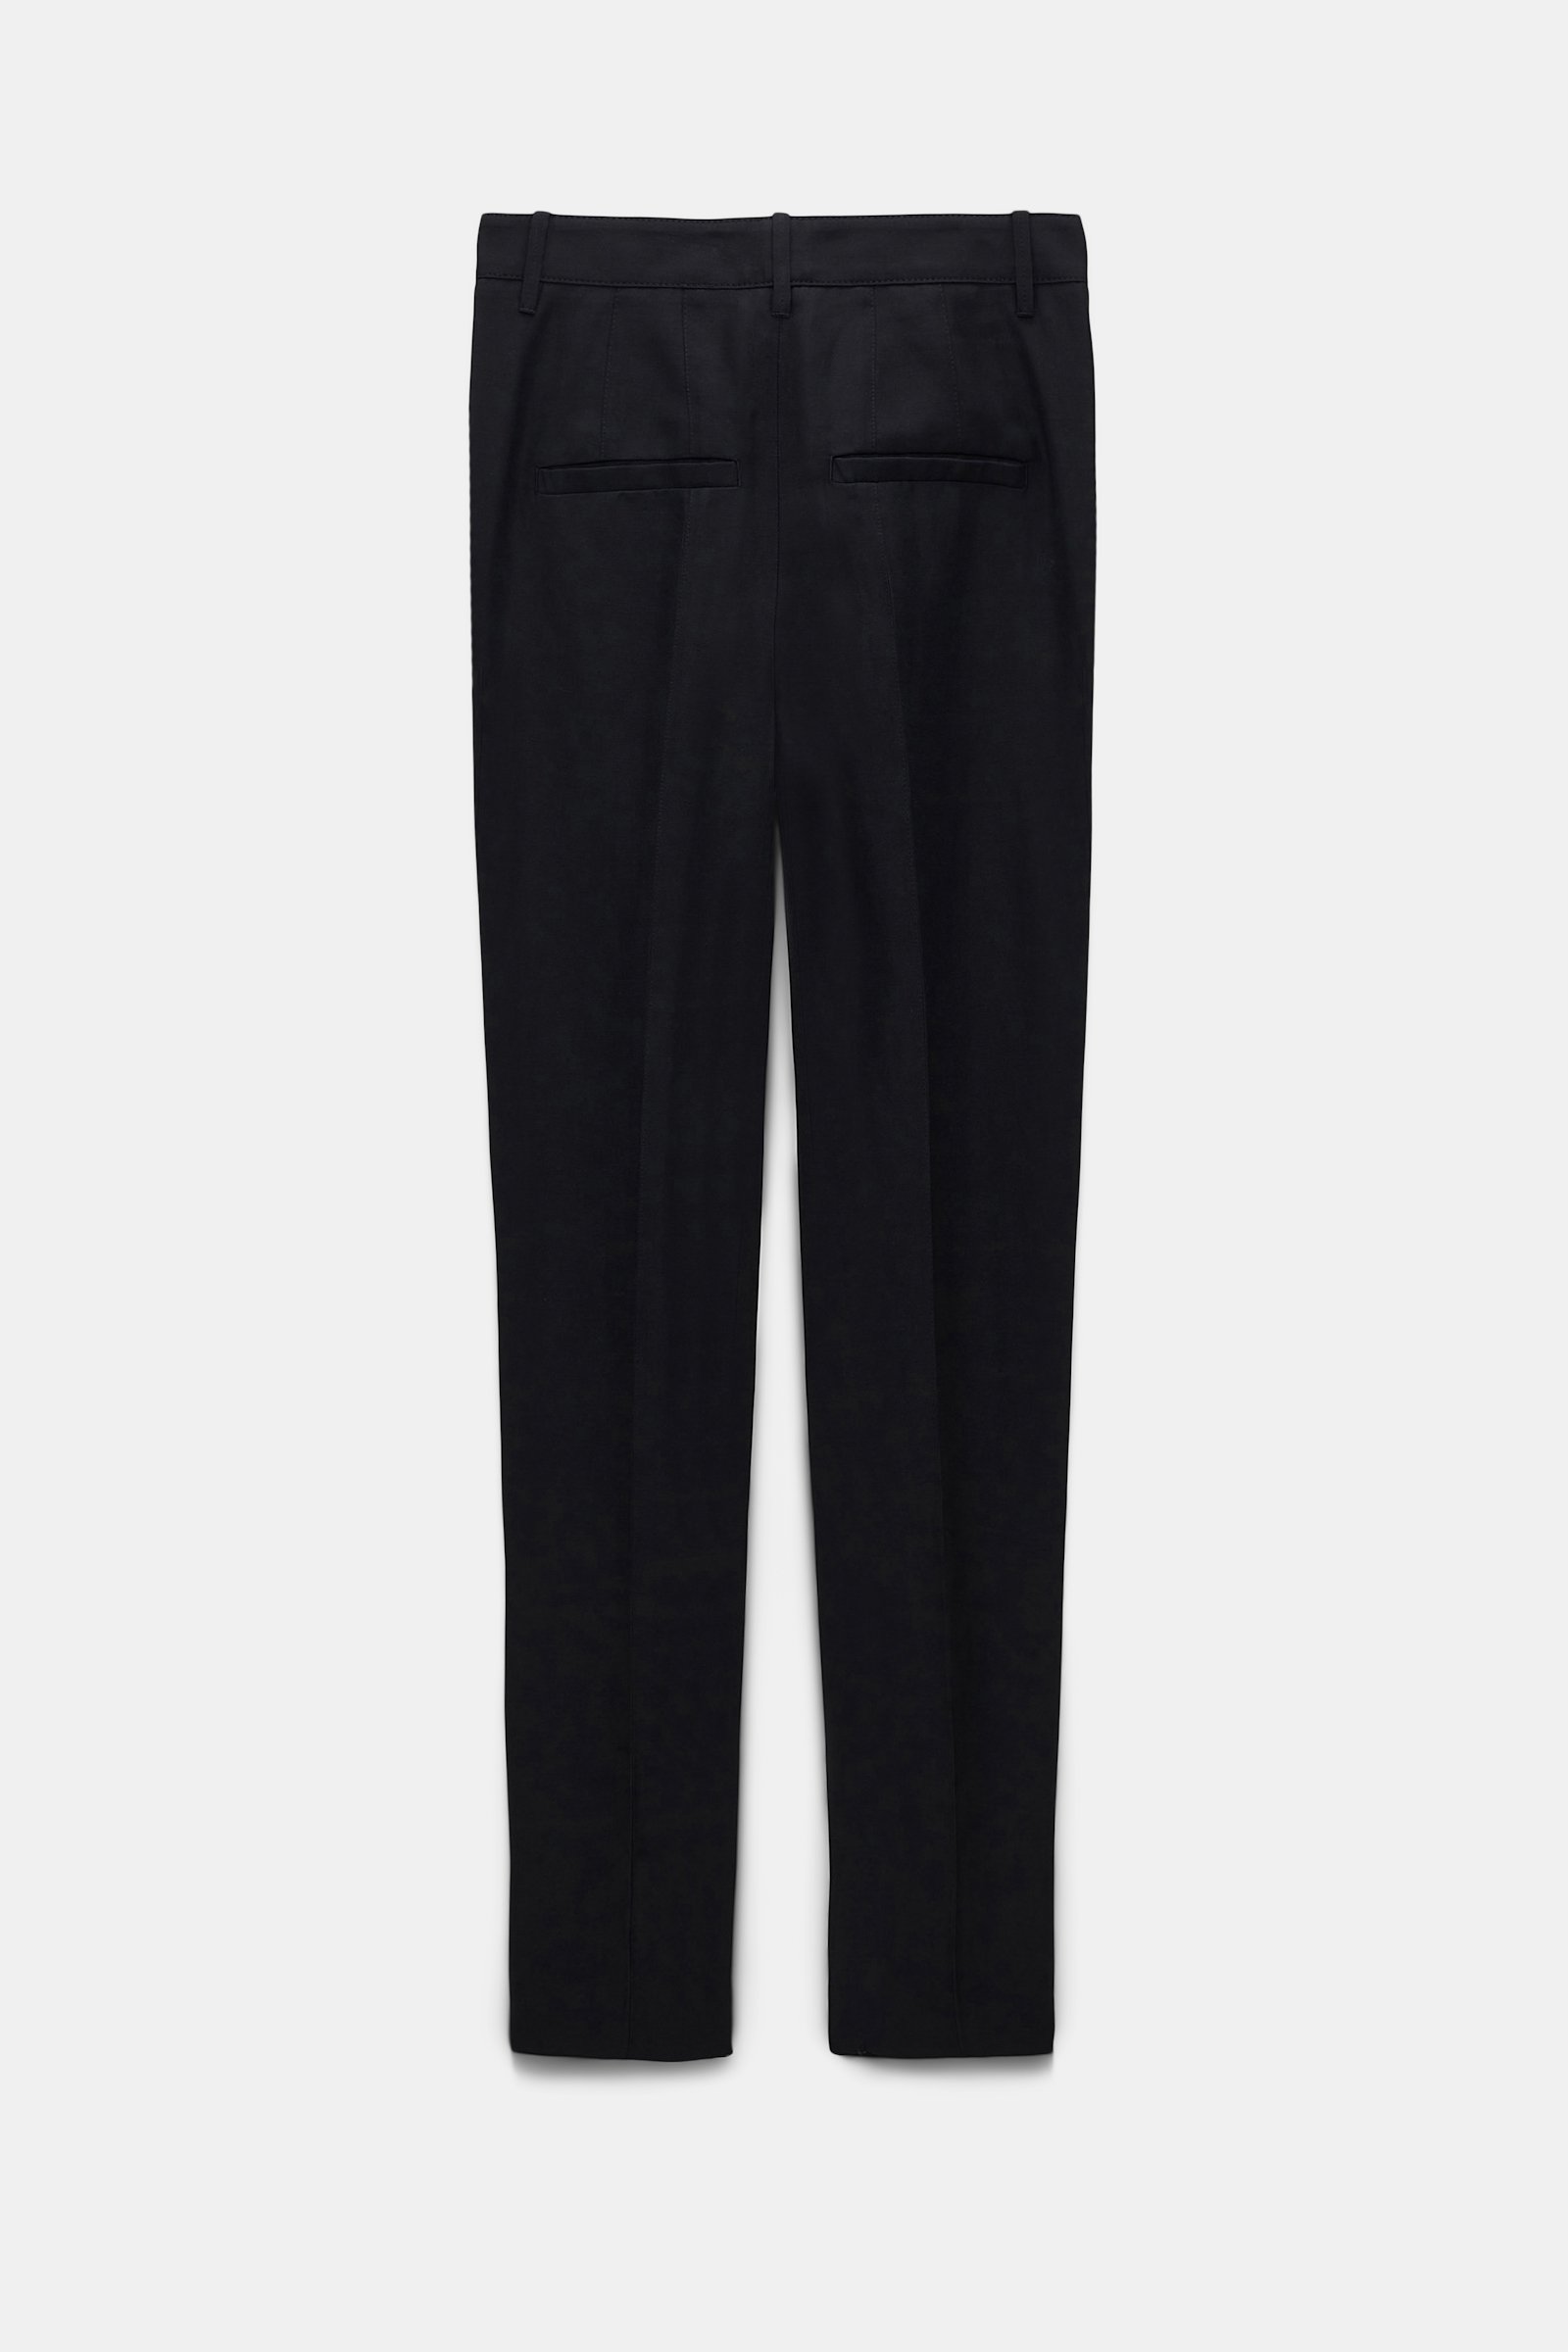 Dorothee Schumacher Slim fit linen blend pants with pintucks pure black